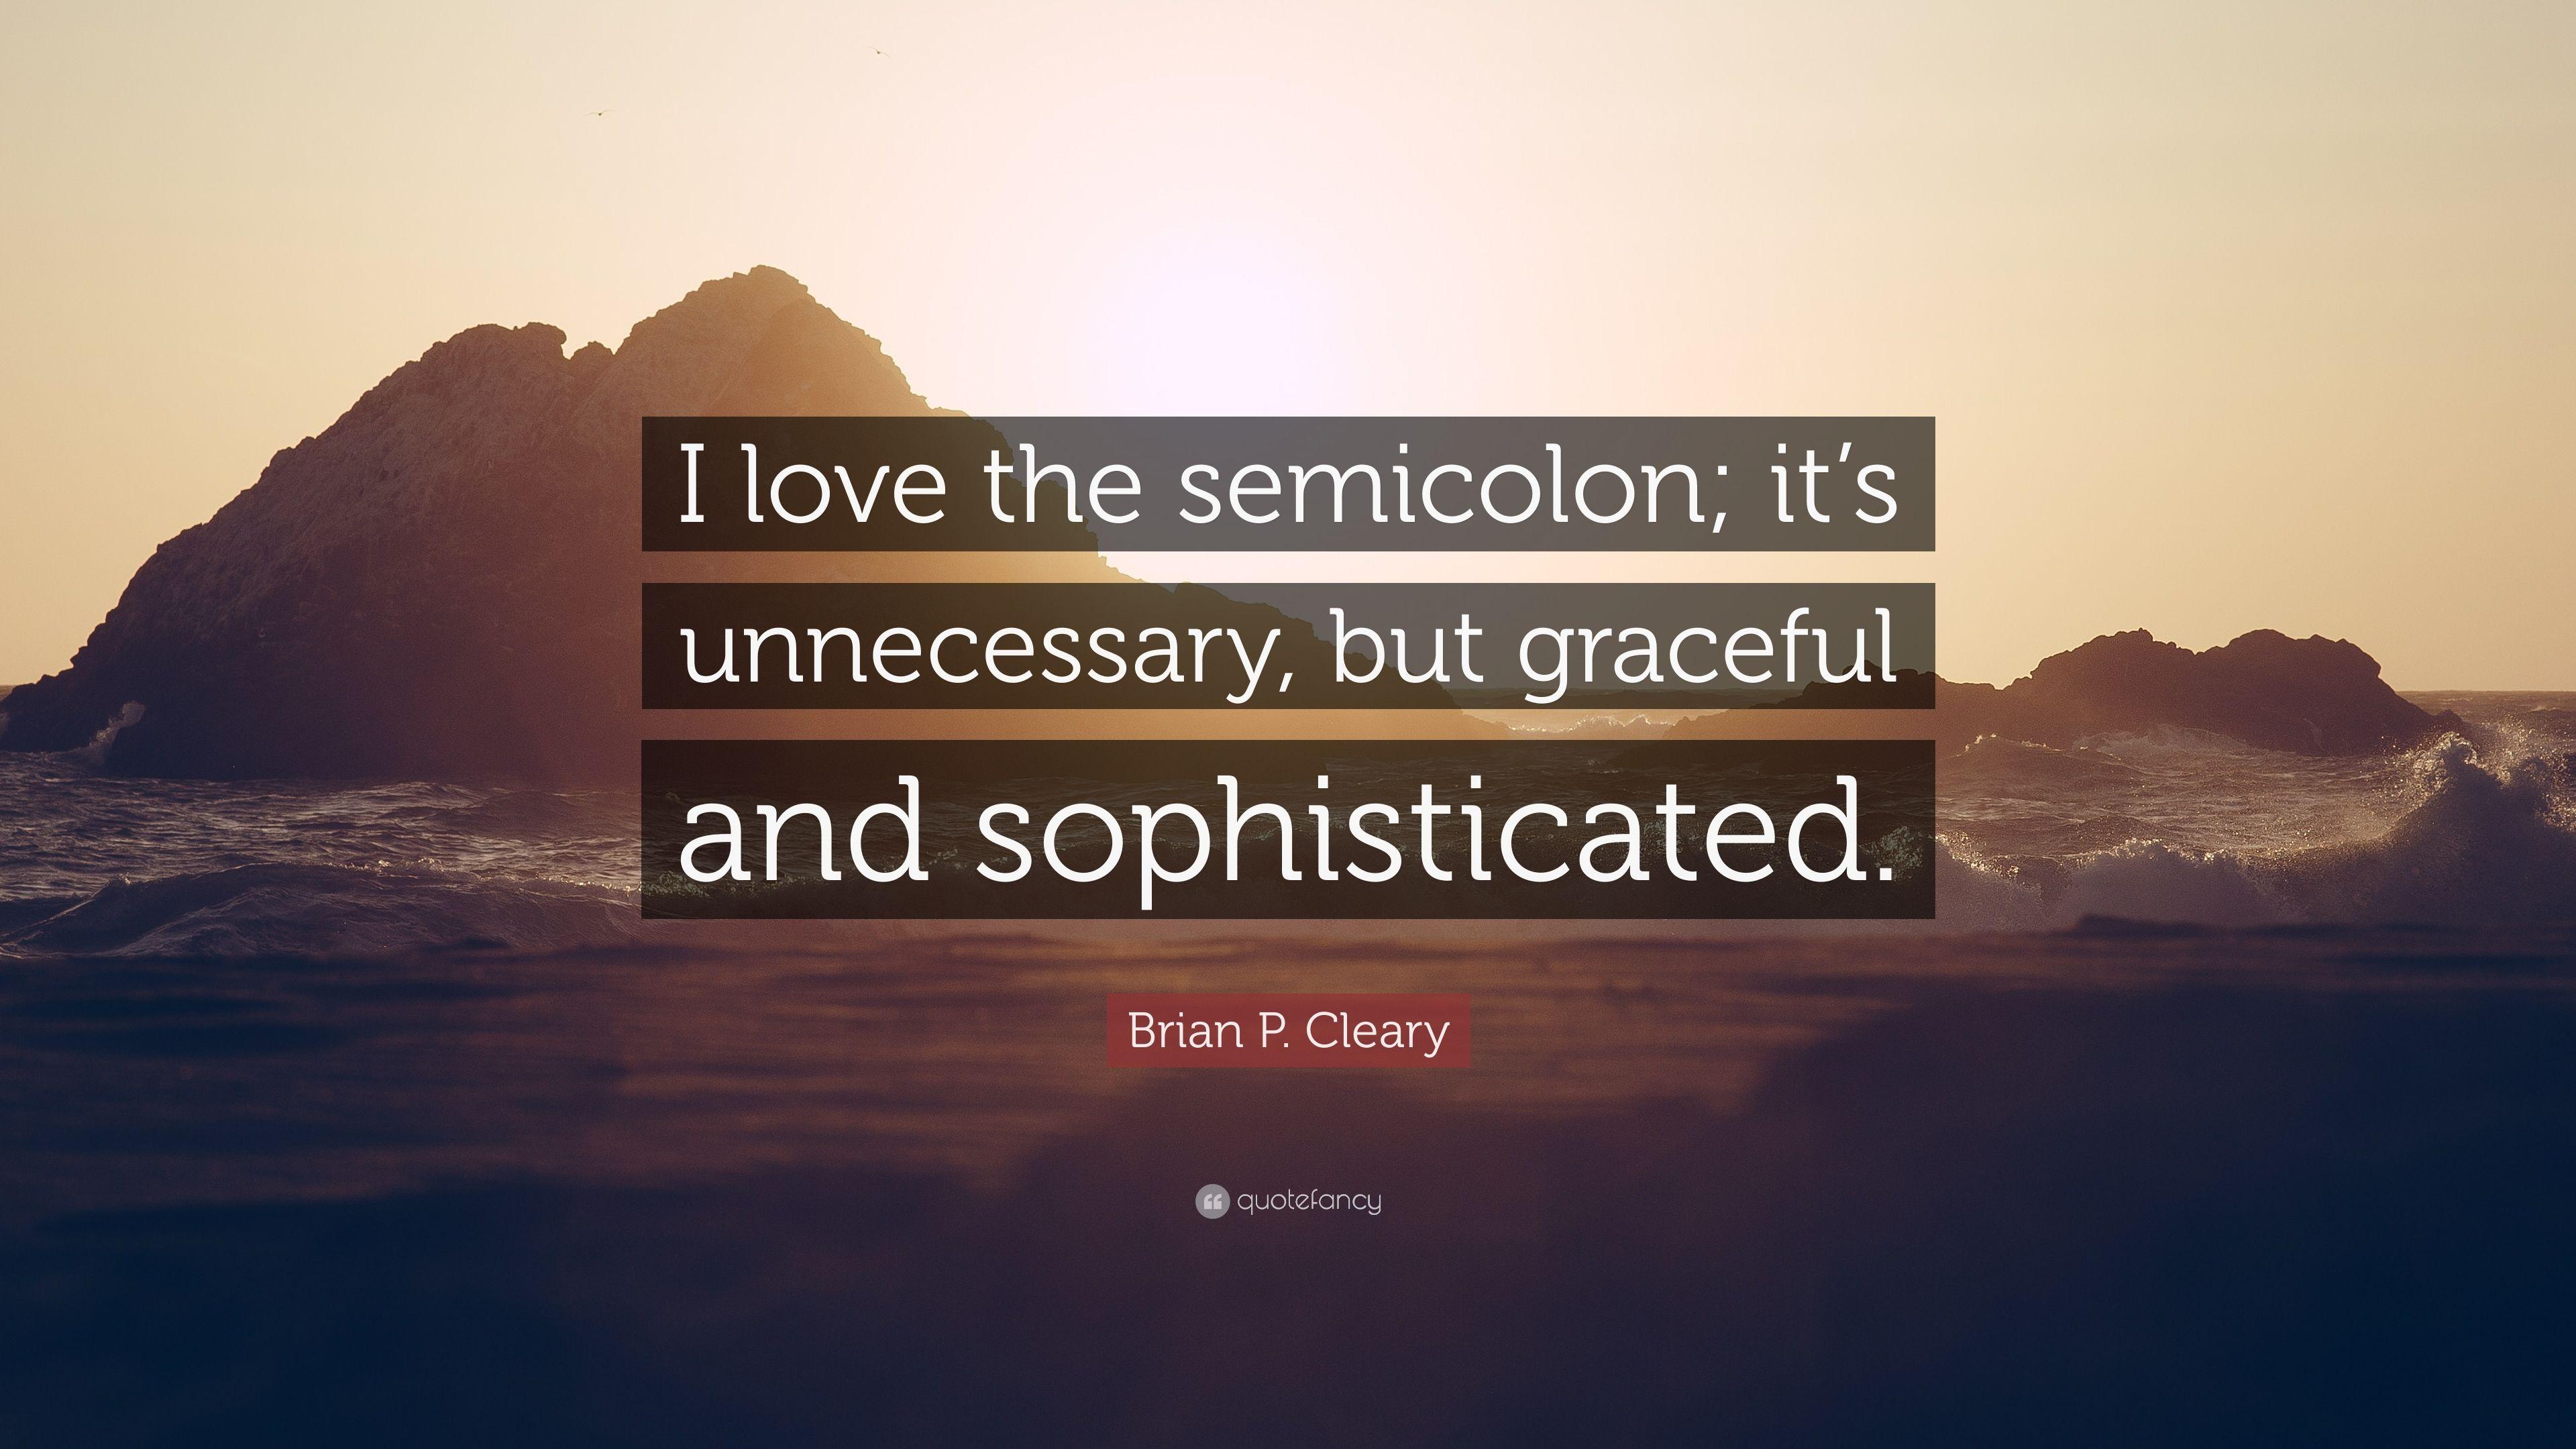 Brian P. Cleary Quote: "I love the semicolon; it's unnecessary, b...